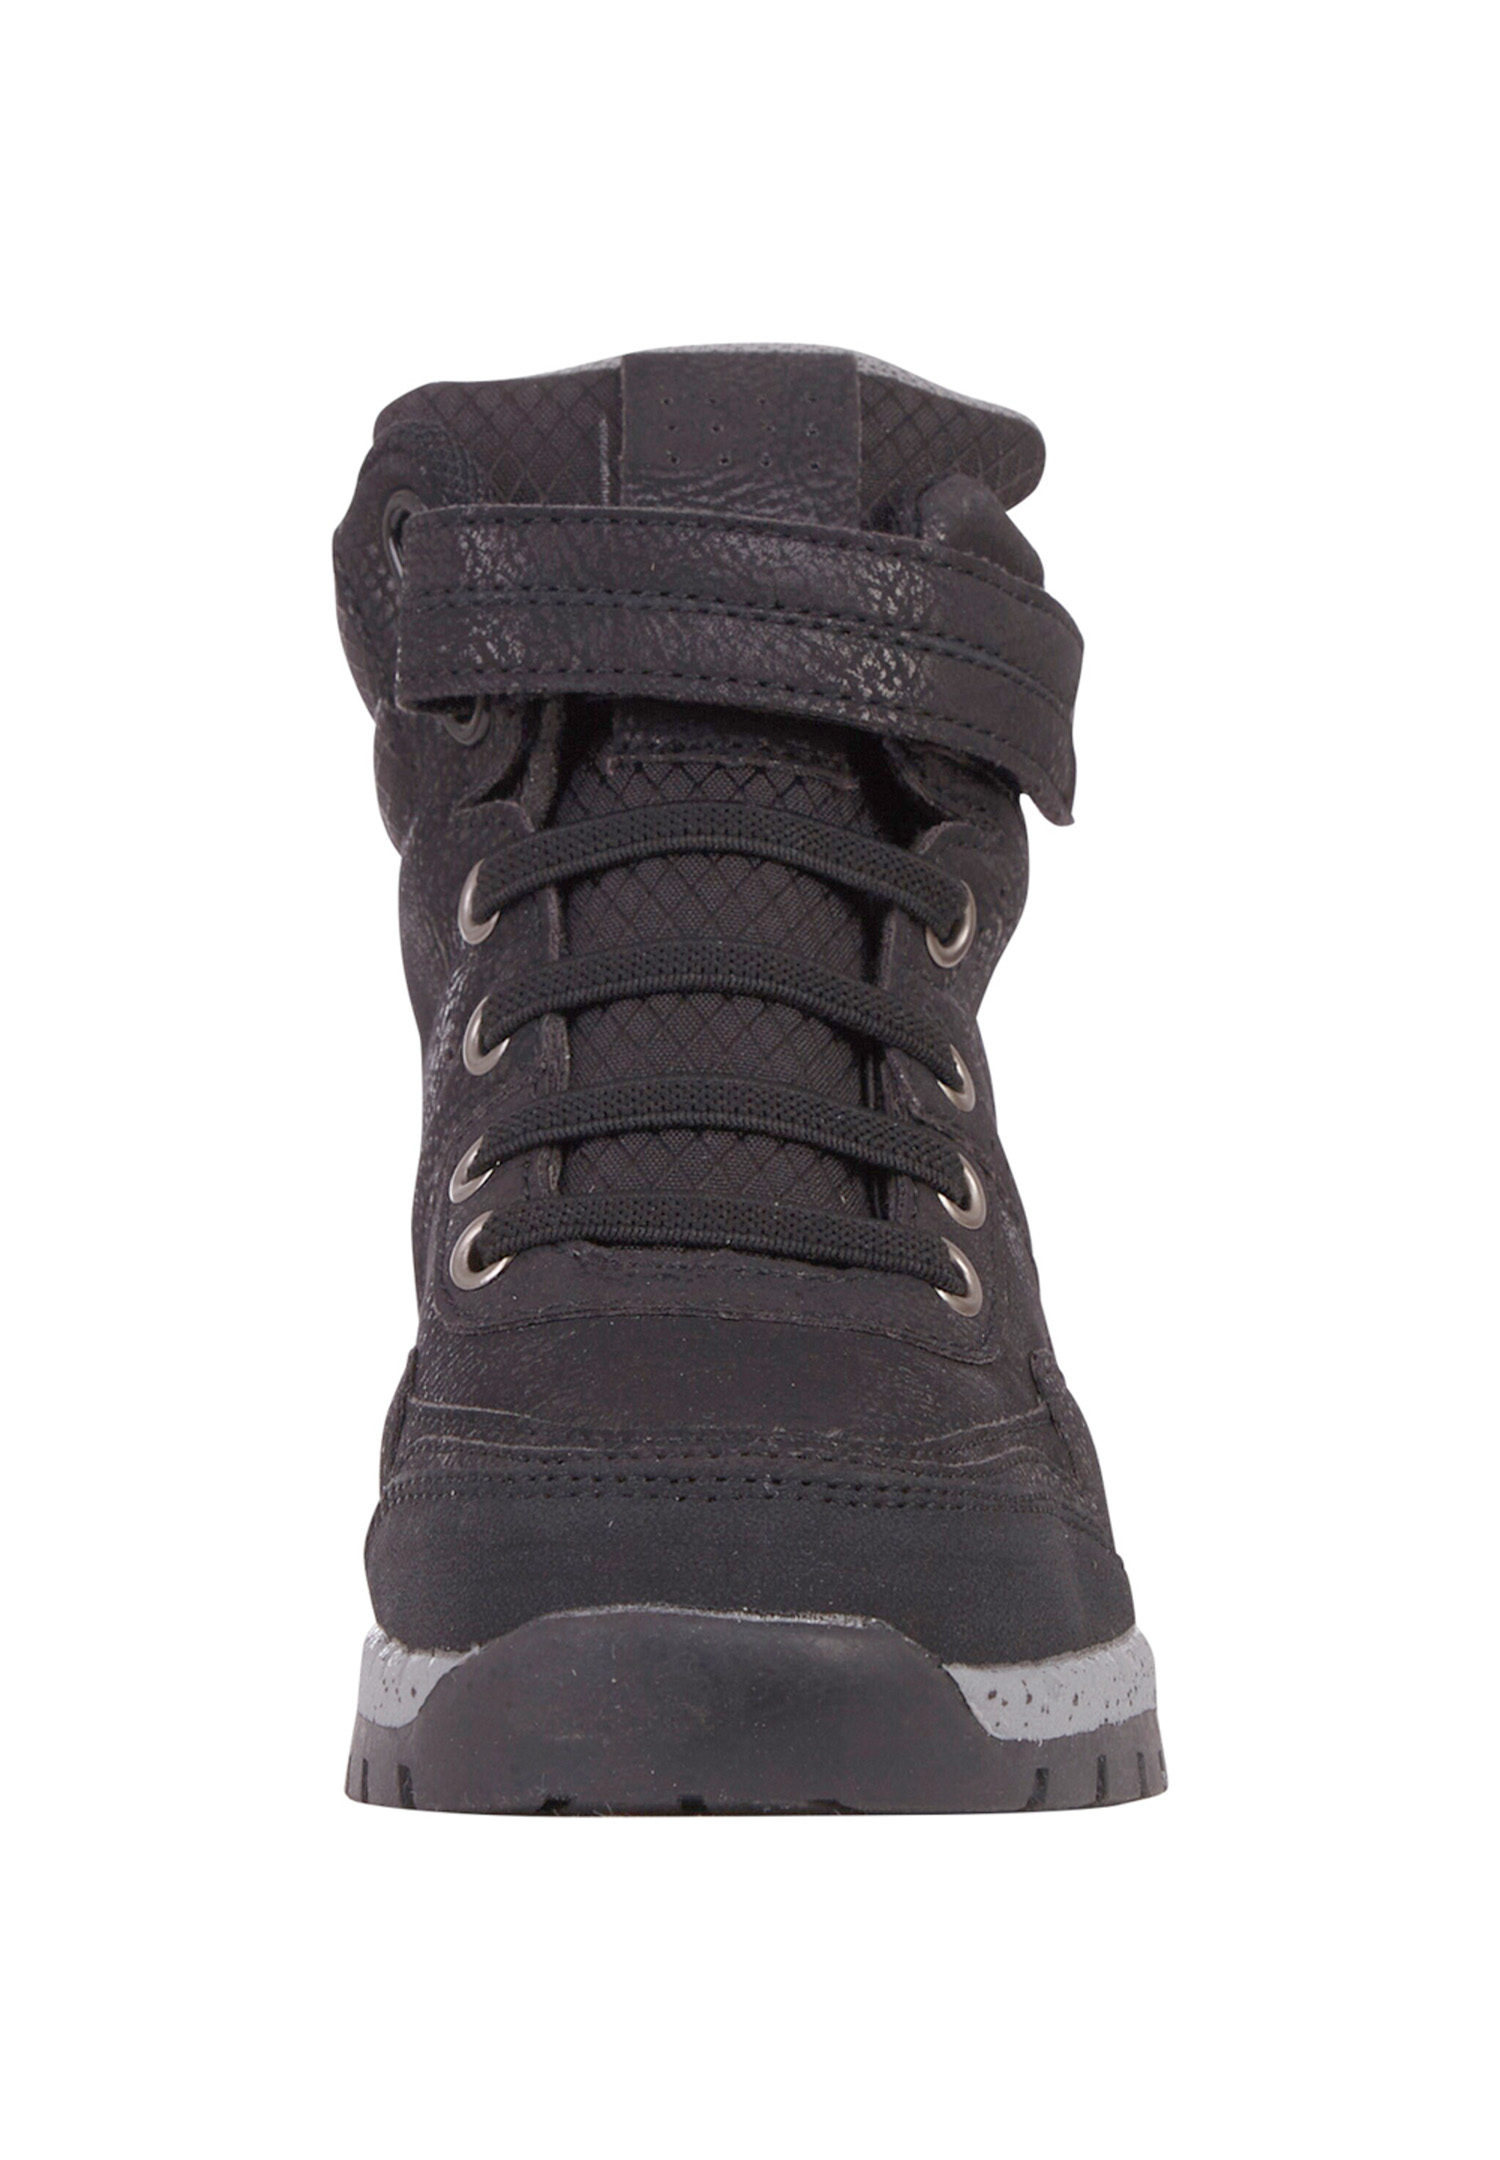 Kappa Unisex Kinder Sneaker High Top Stylecode 260732K 1116 schwarz